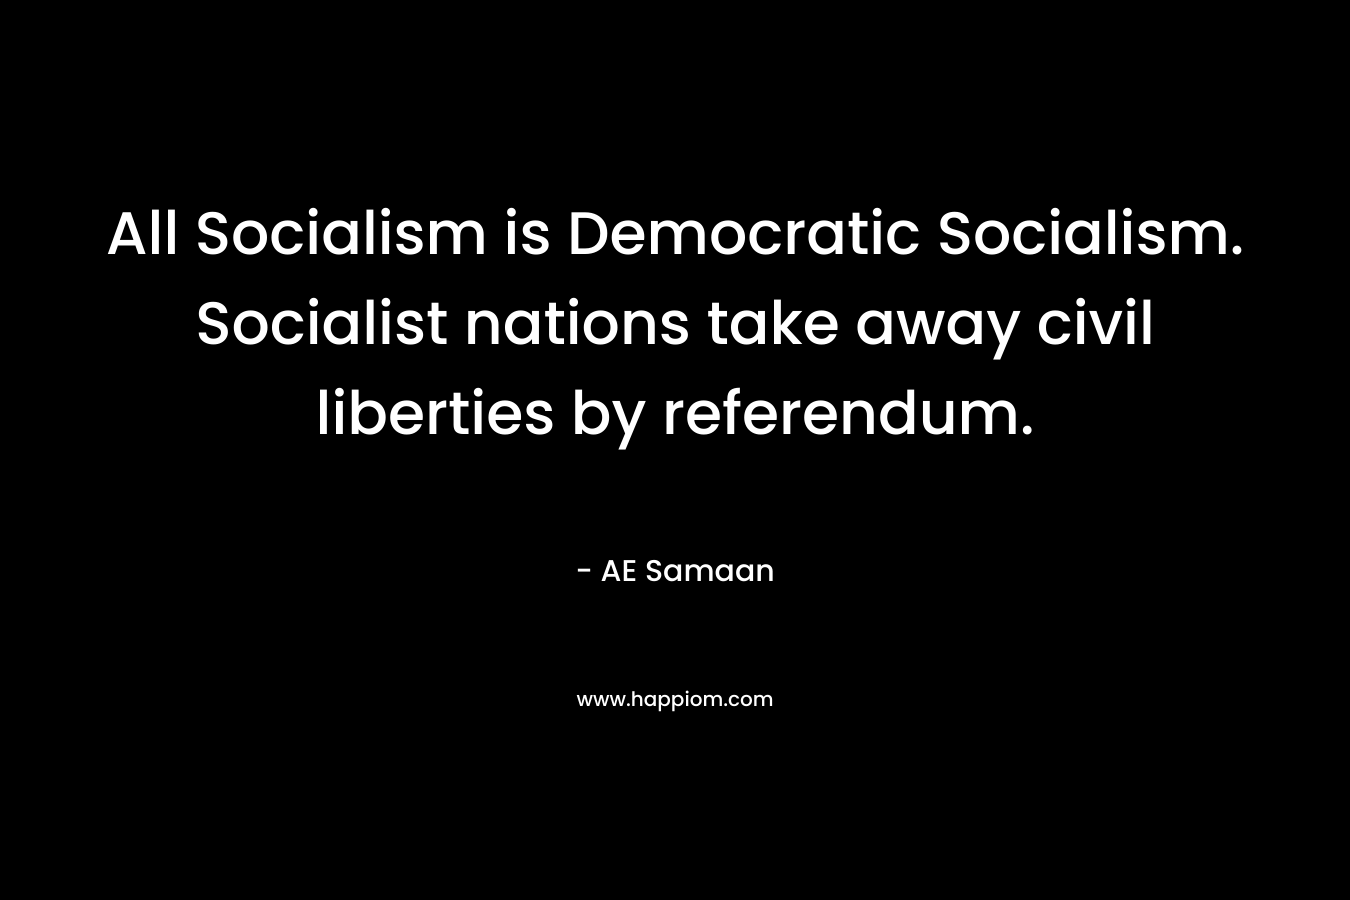 All Socialism is Democratic Socialism. Socialist nations take away civil liberties by referendum.